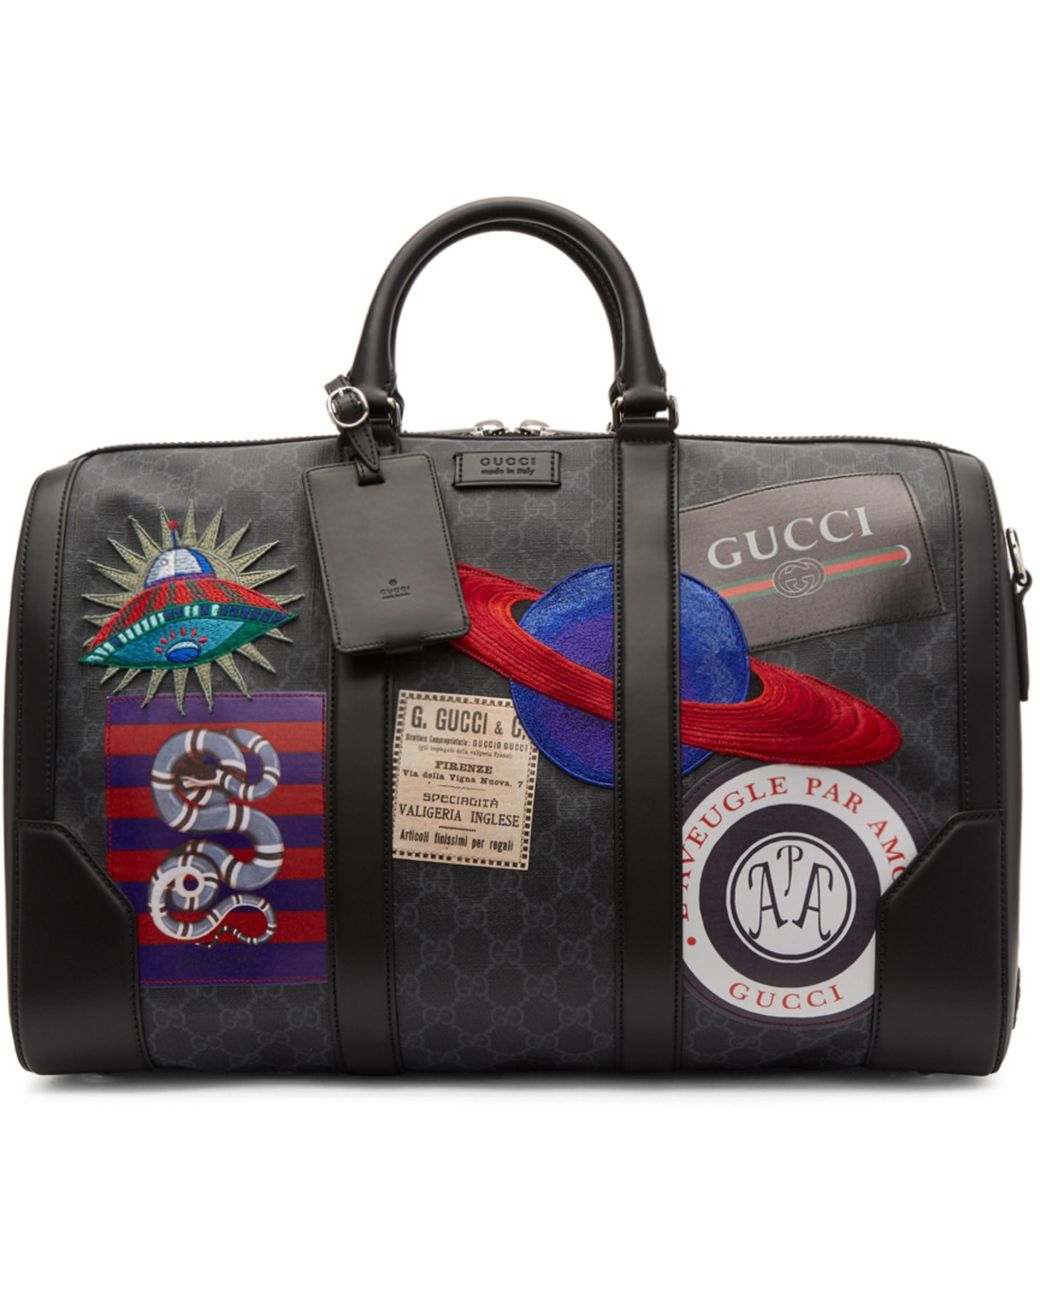 Gucci Bag Patch 